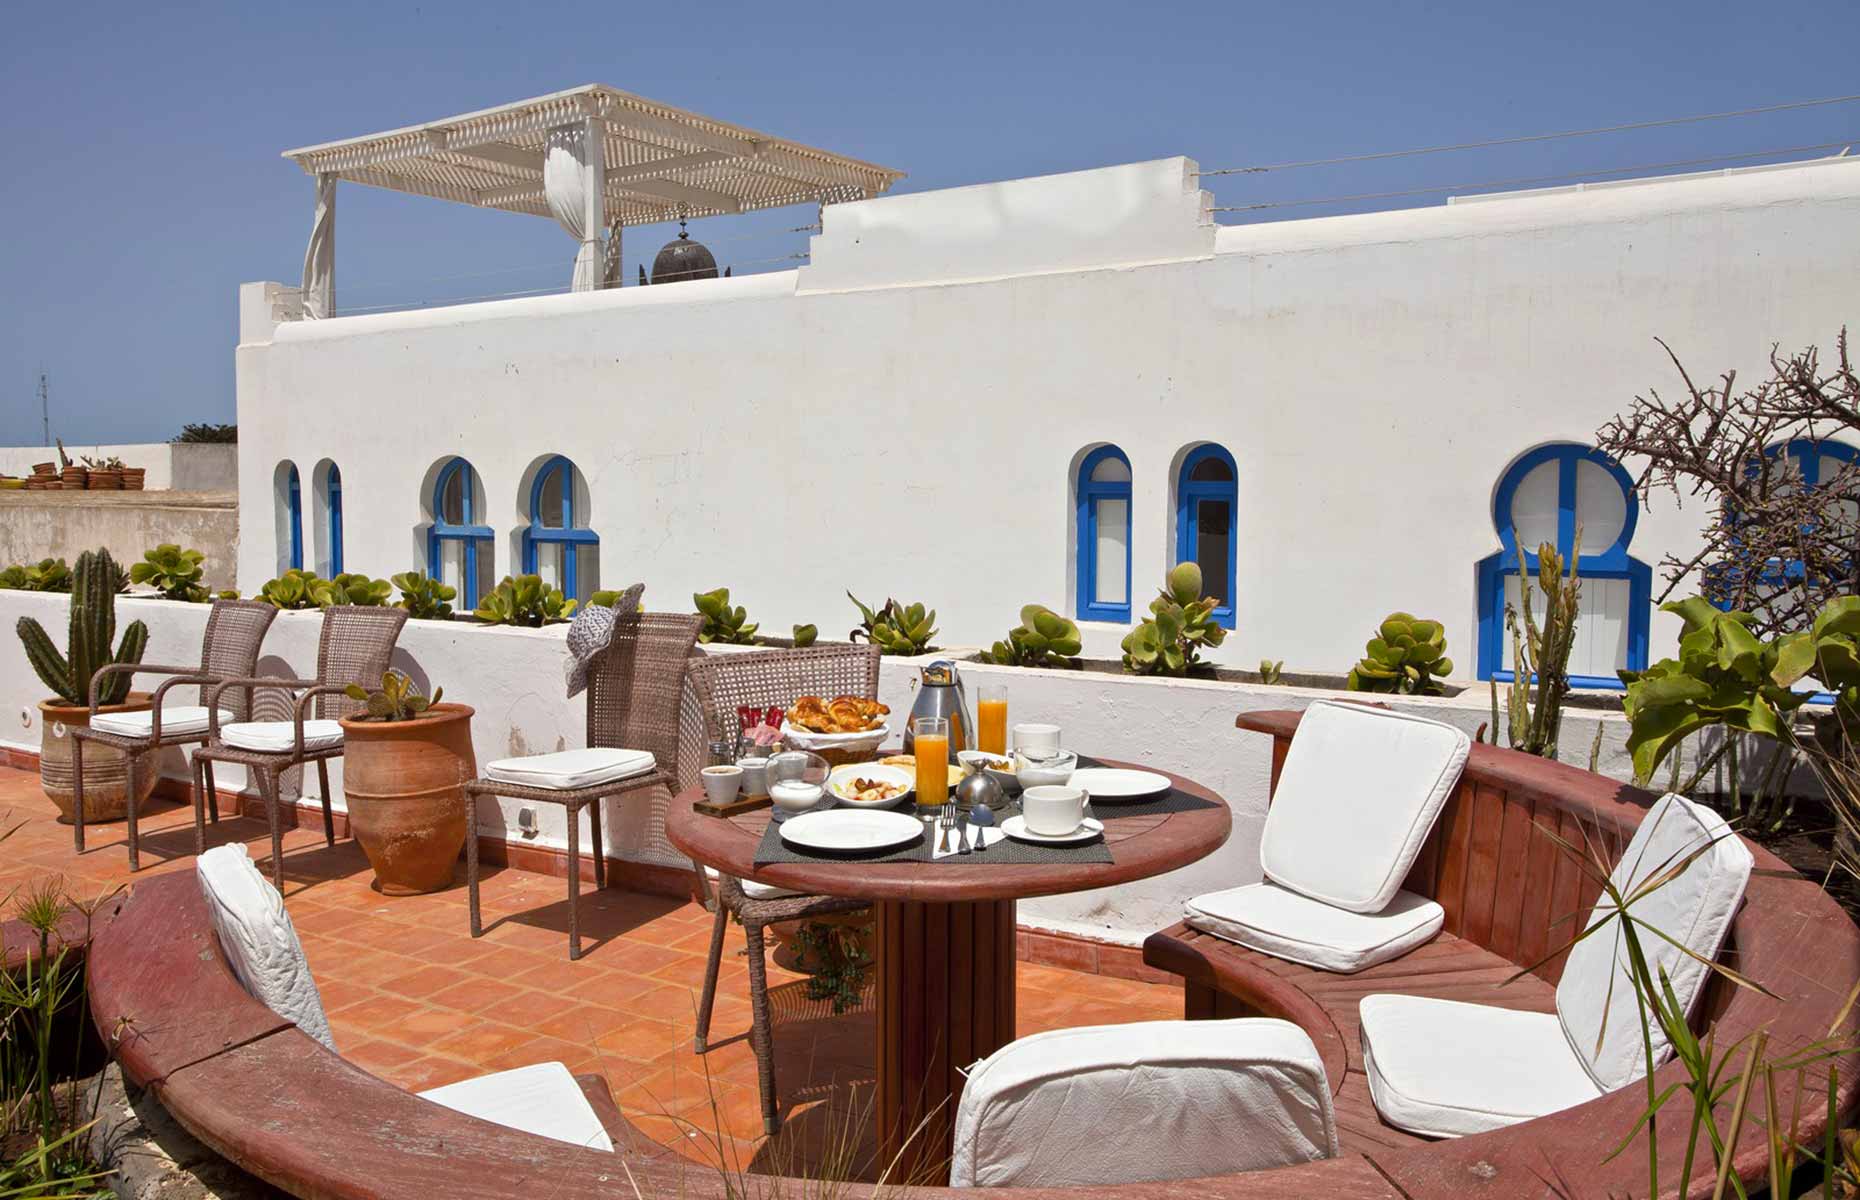 Terrasse hôtel - Séjour Maroc, voyage Essaouira